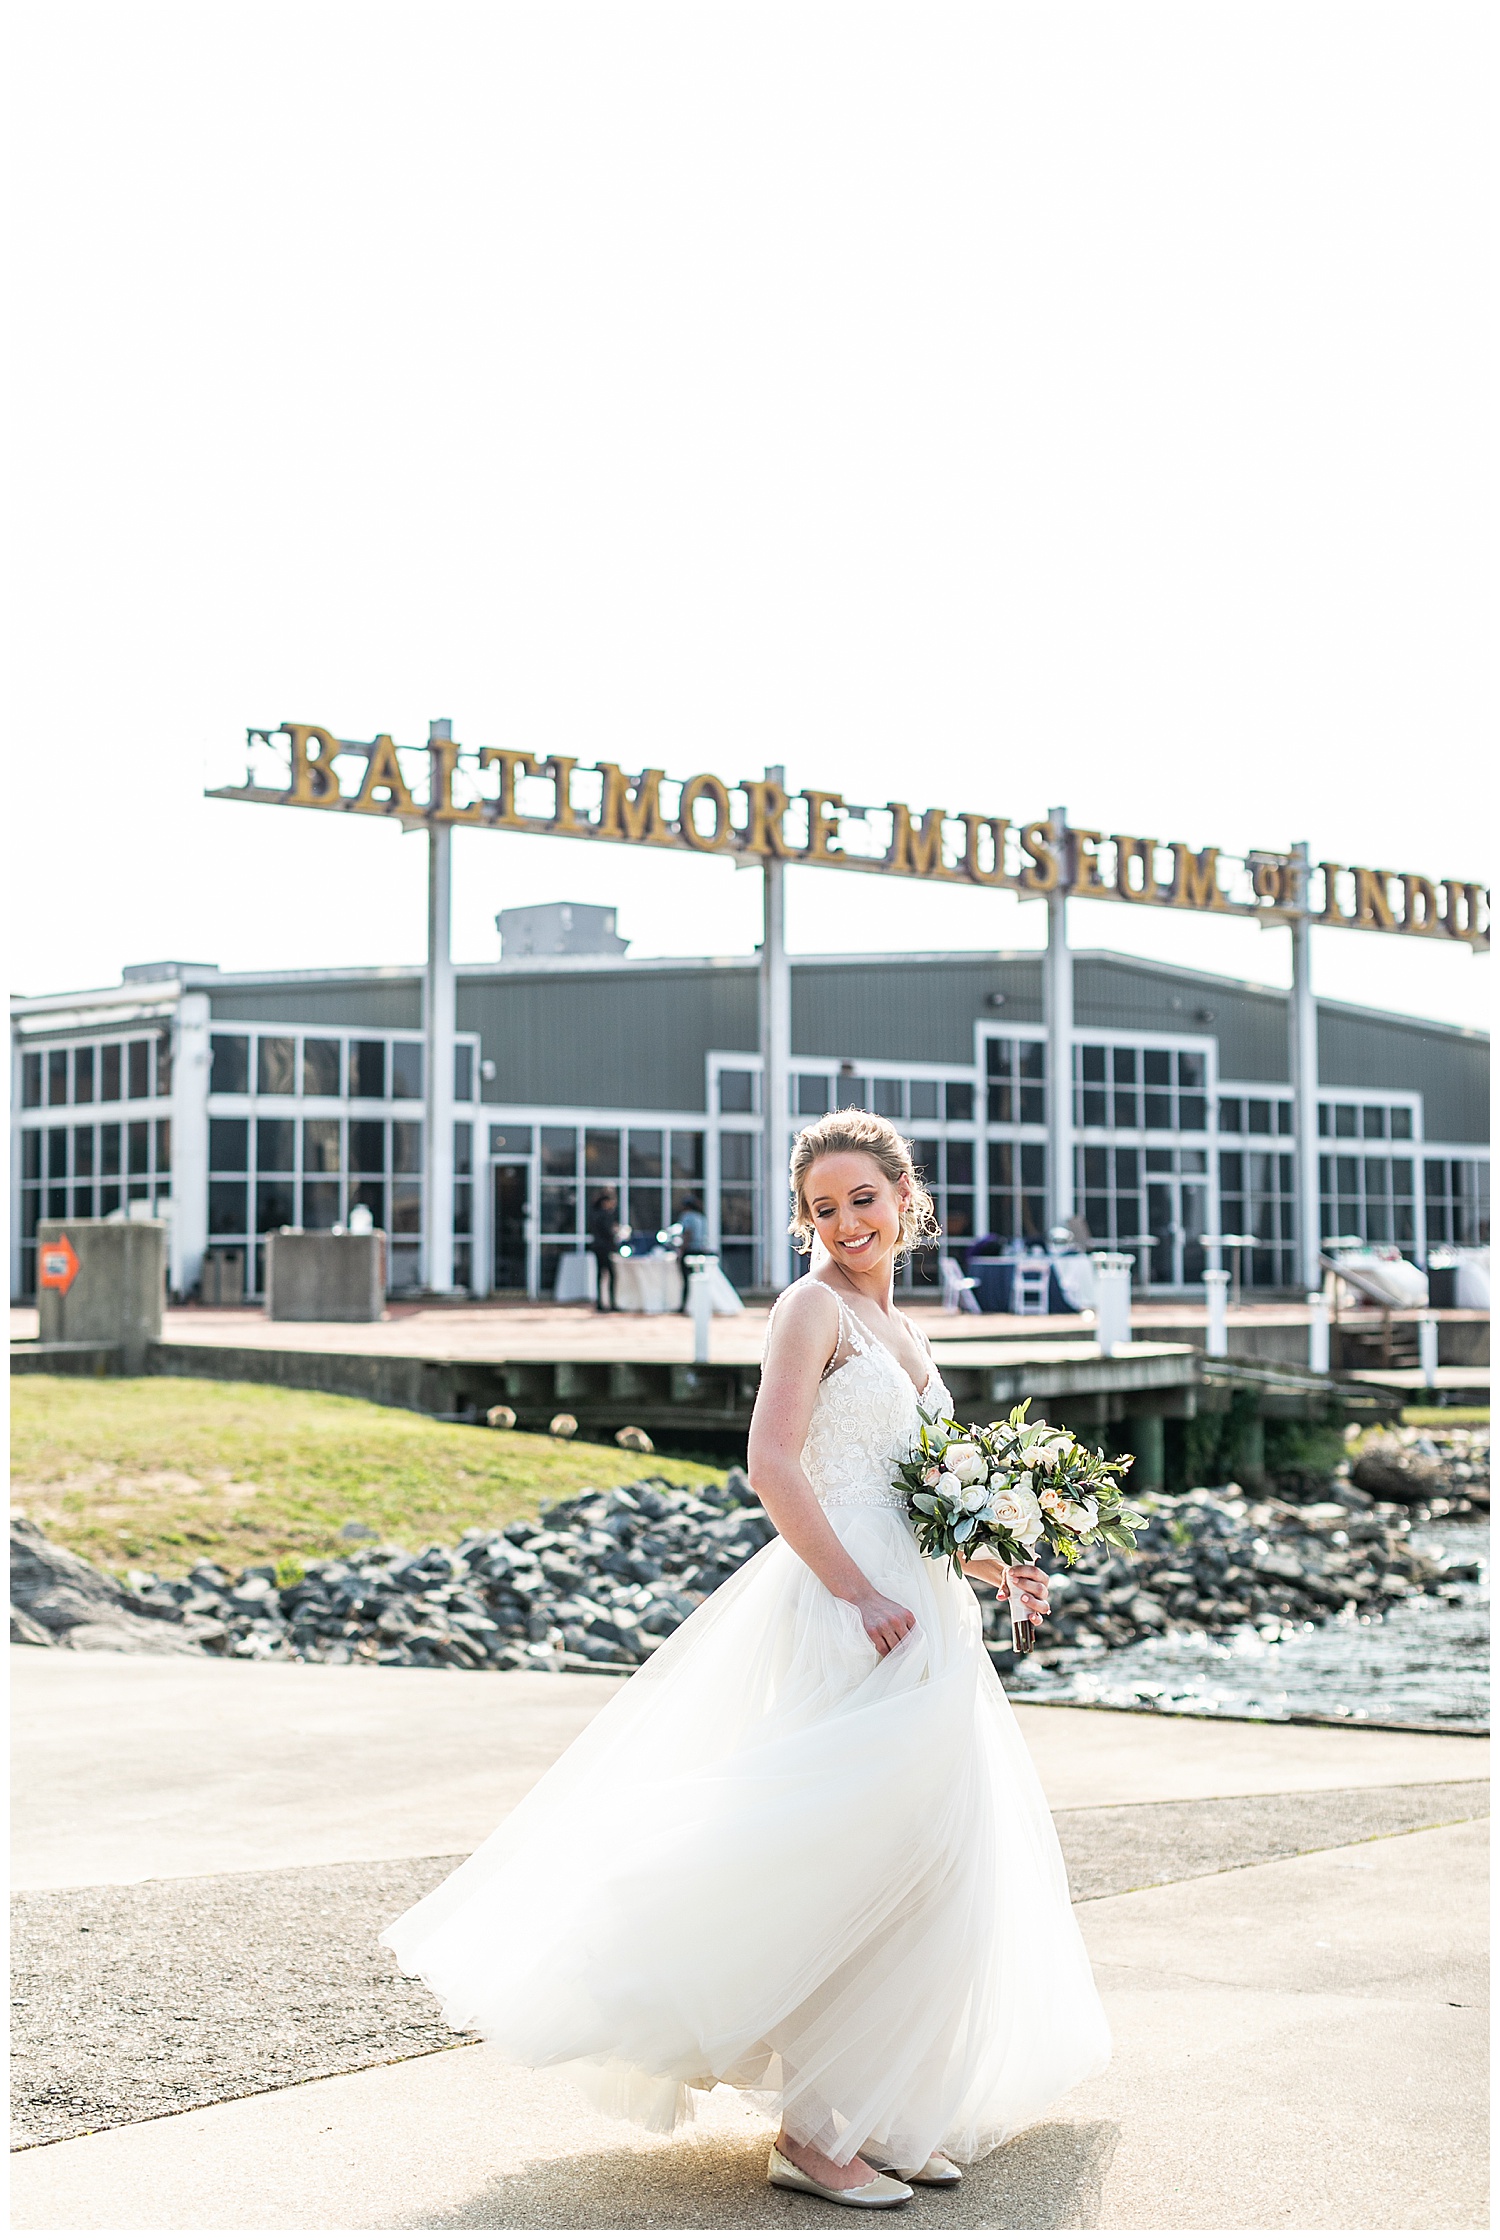 Jenn James Baltimore Museum of Industry Wedding Living Radiant Photography photos_0086.jpg